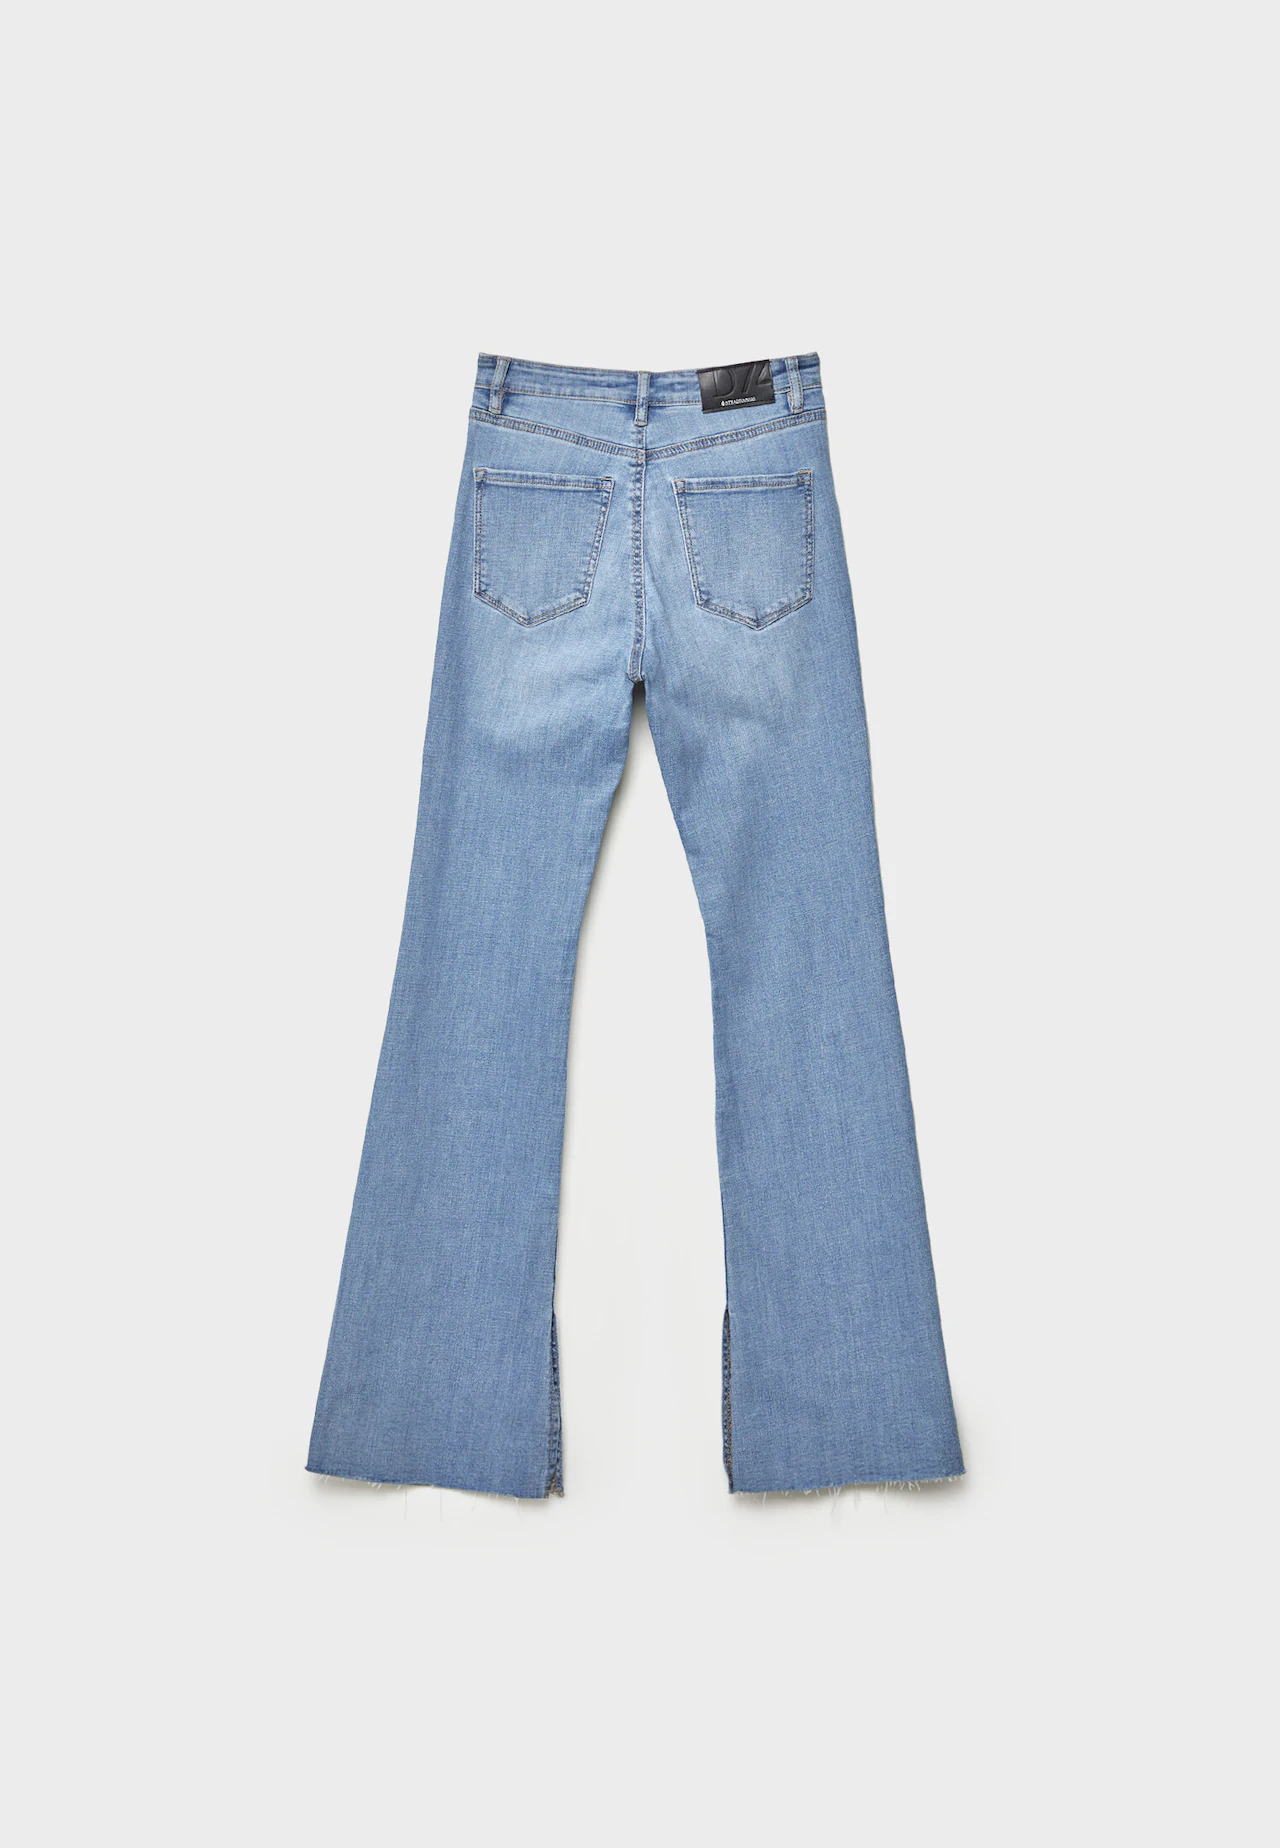 ZARA cropped flared jeans white high waist flare hem zara jeans